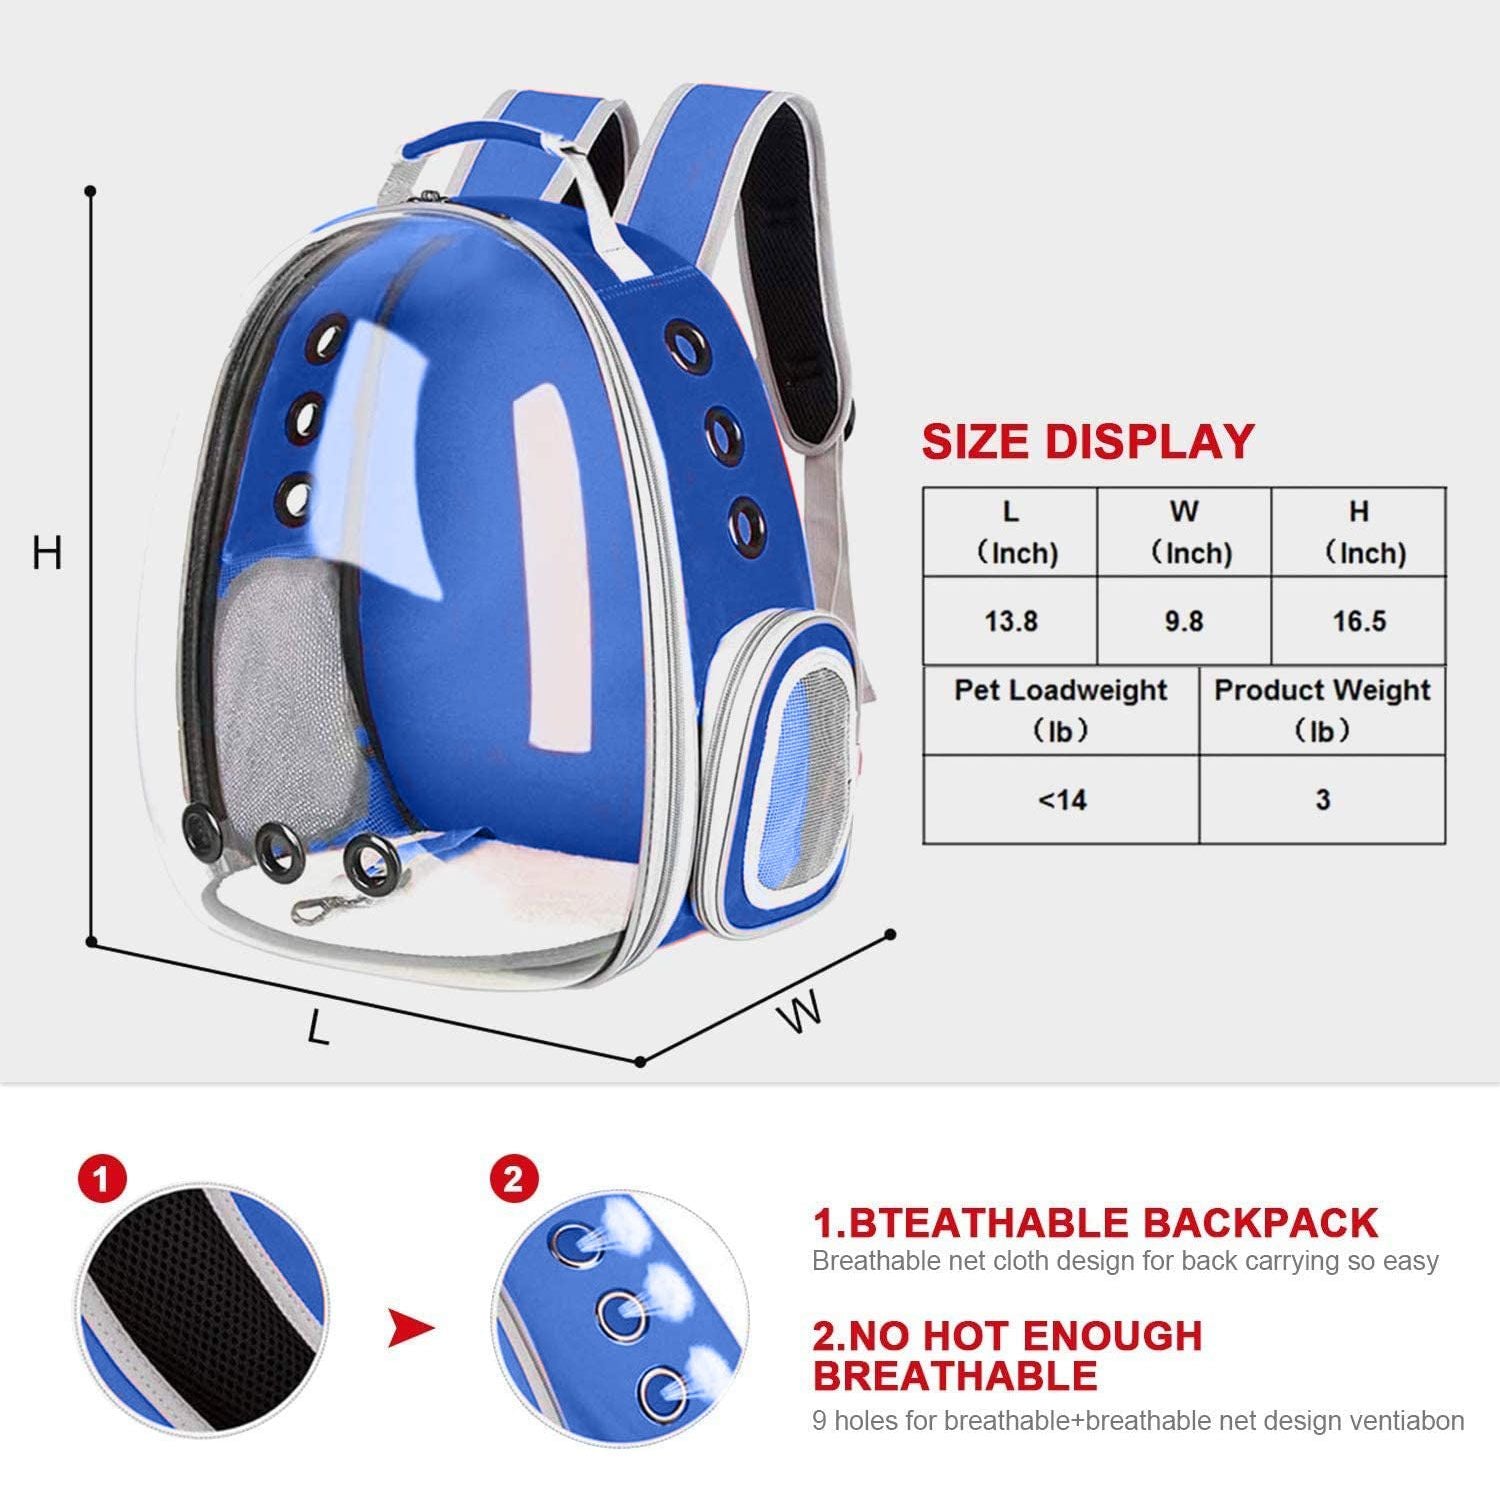 Floofi Space Capsule Backpack - Model 1 (Blue)